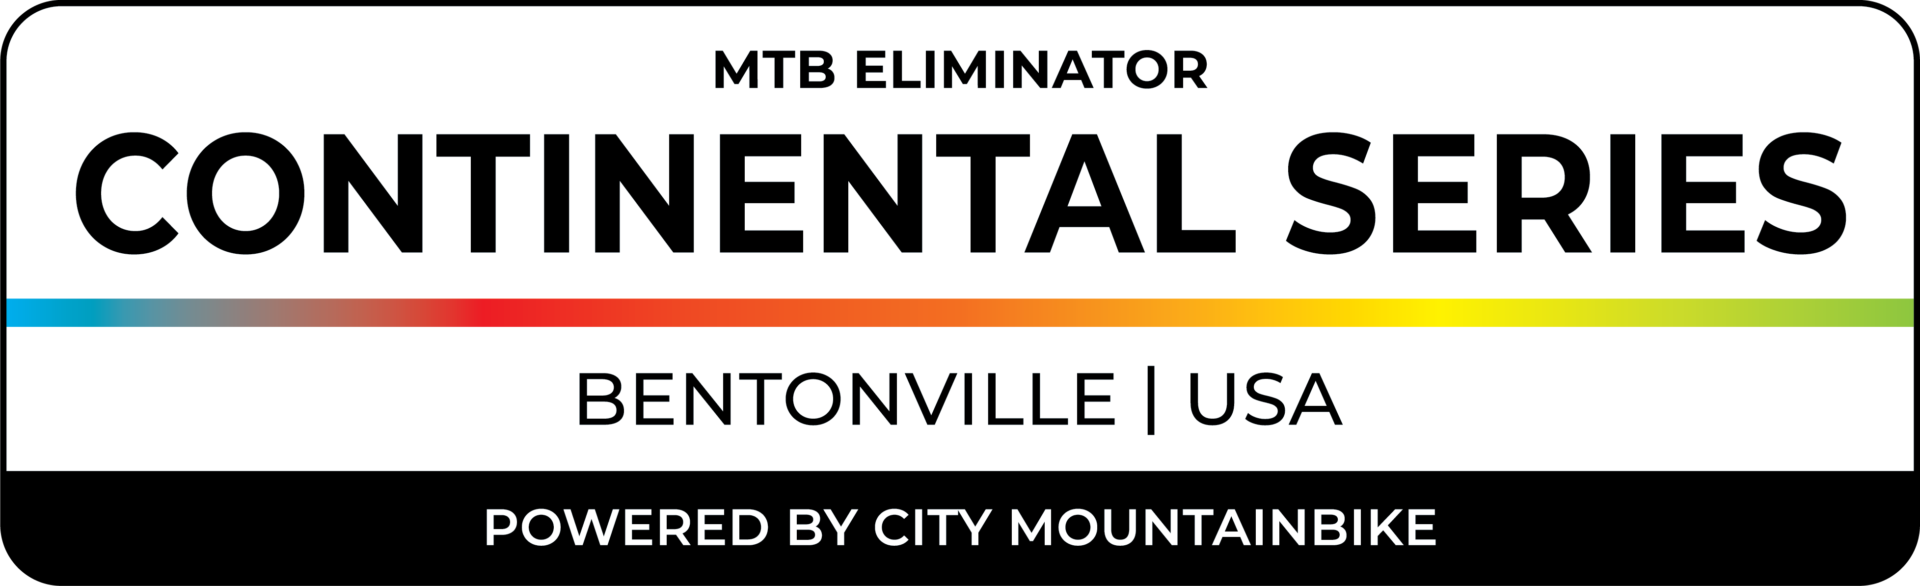 Continental Series Bentonville USA